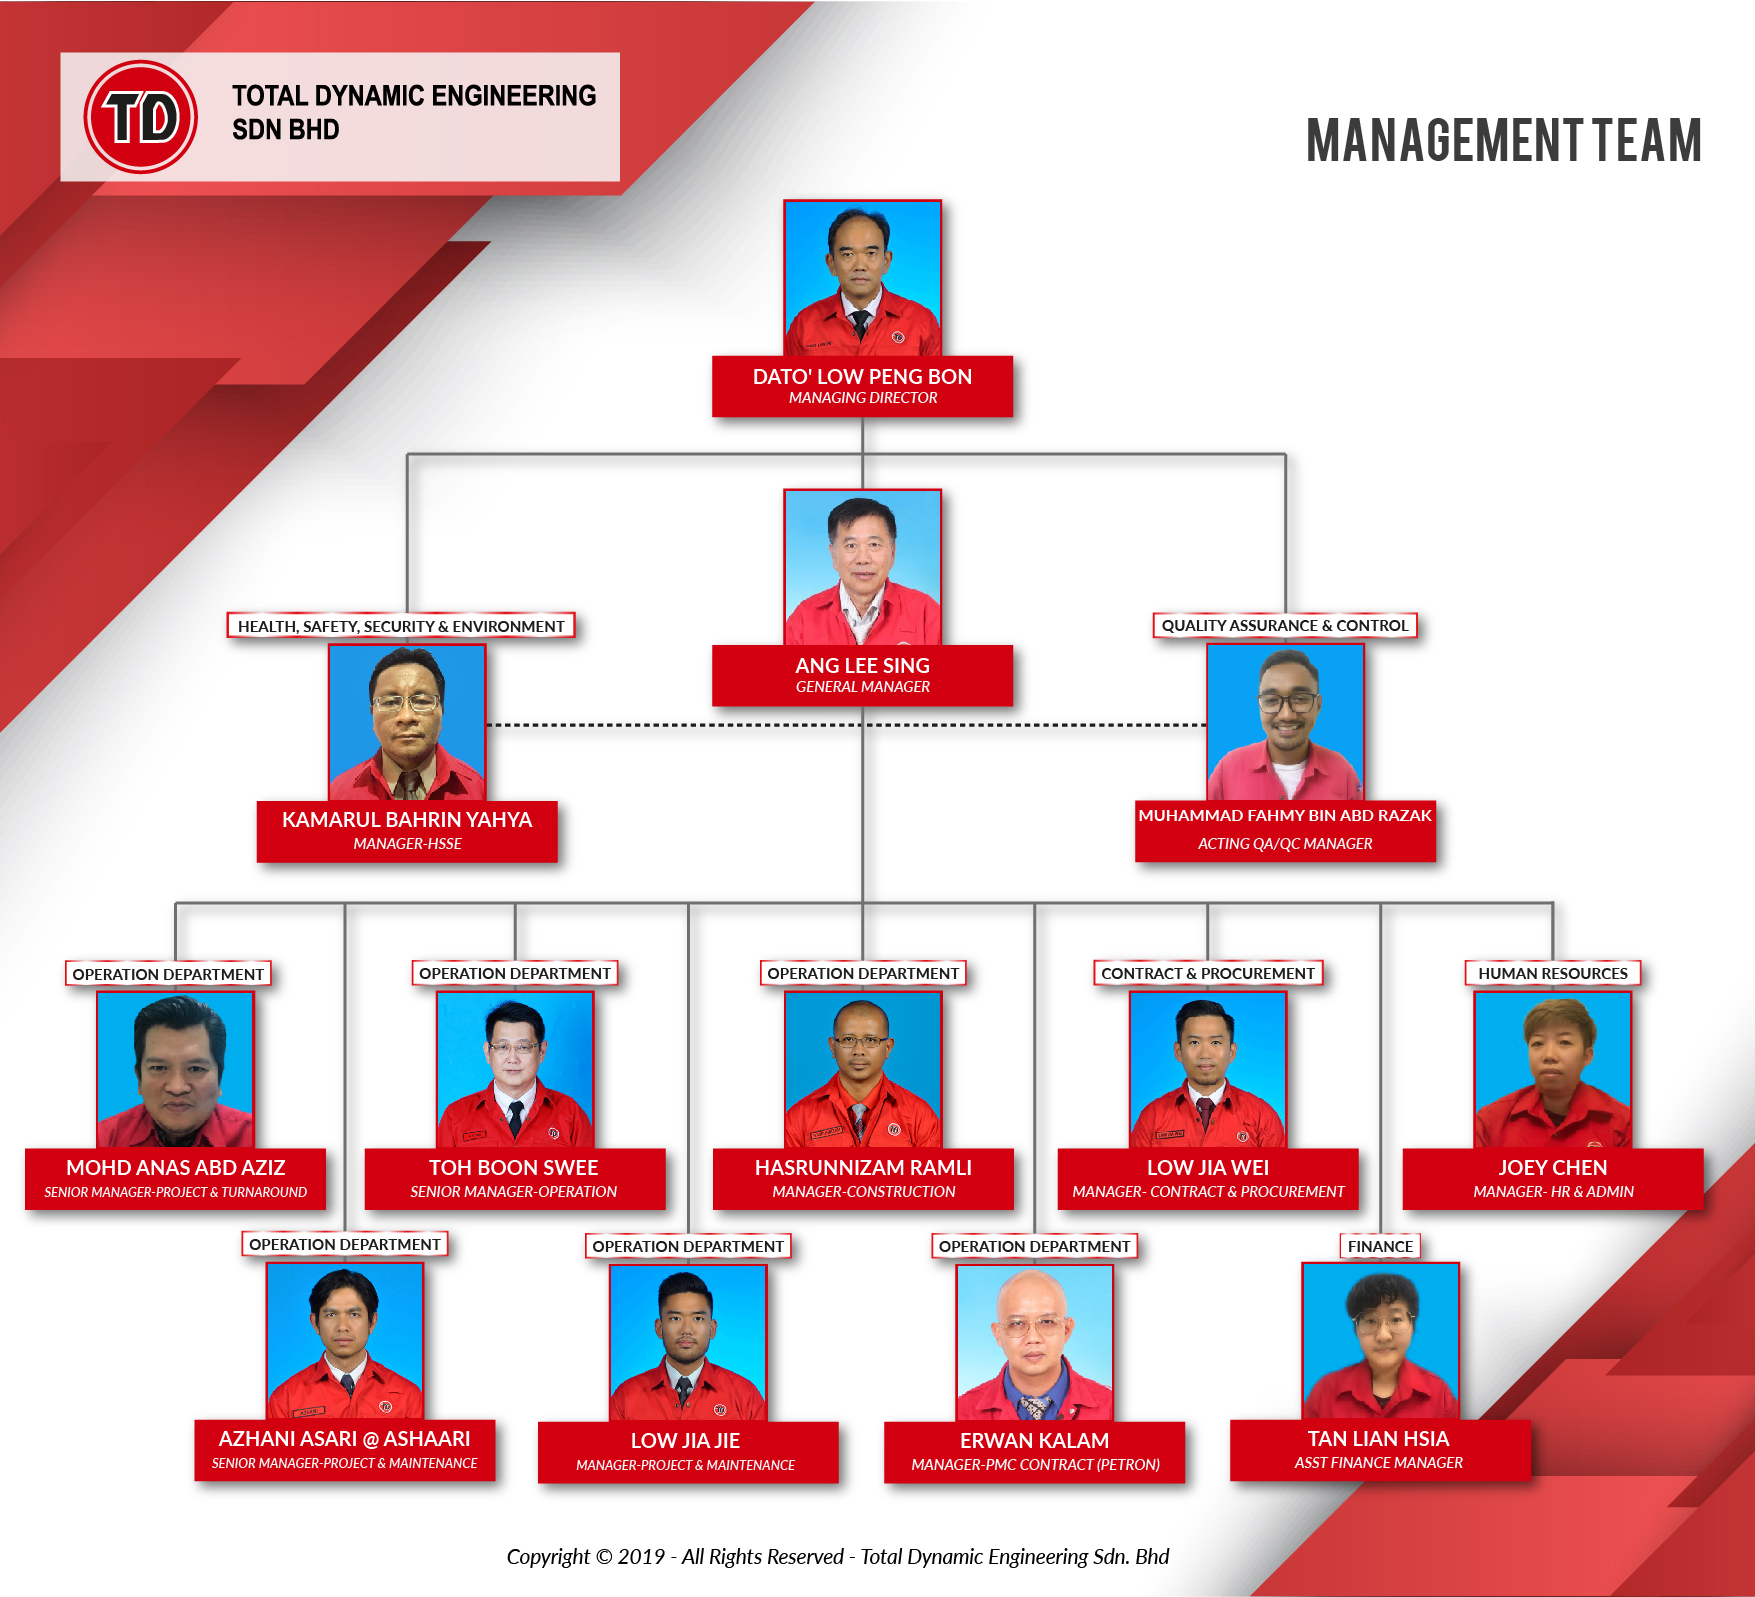 Management Team Organization Chart